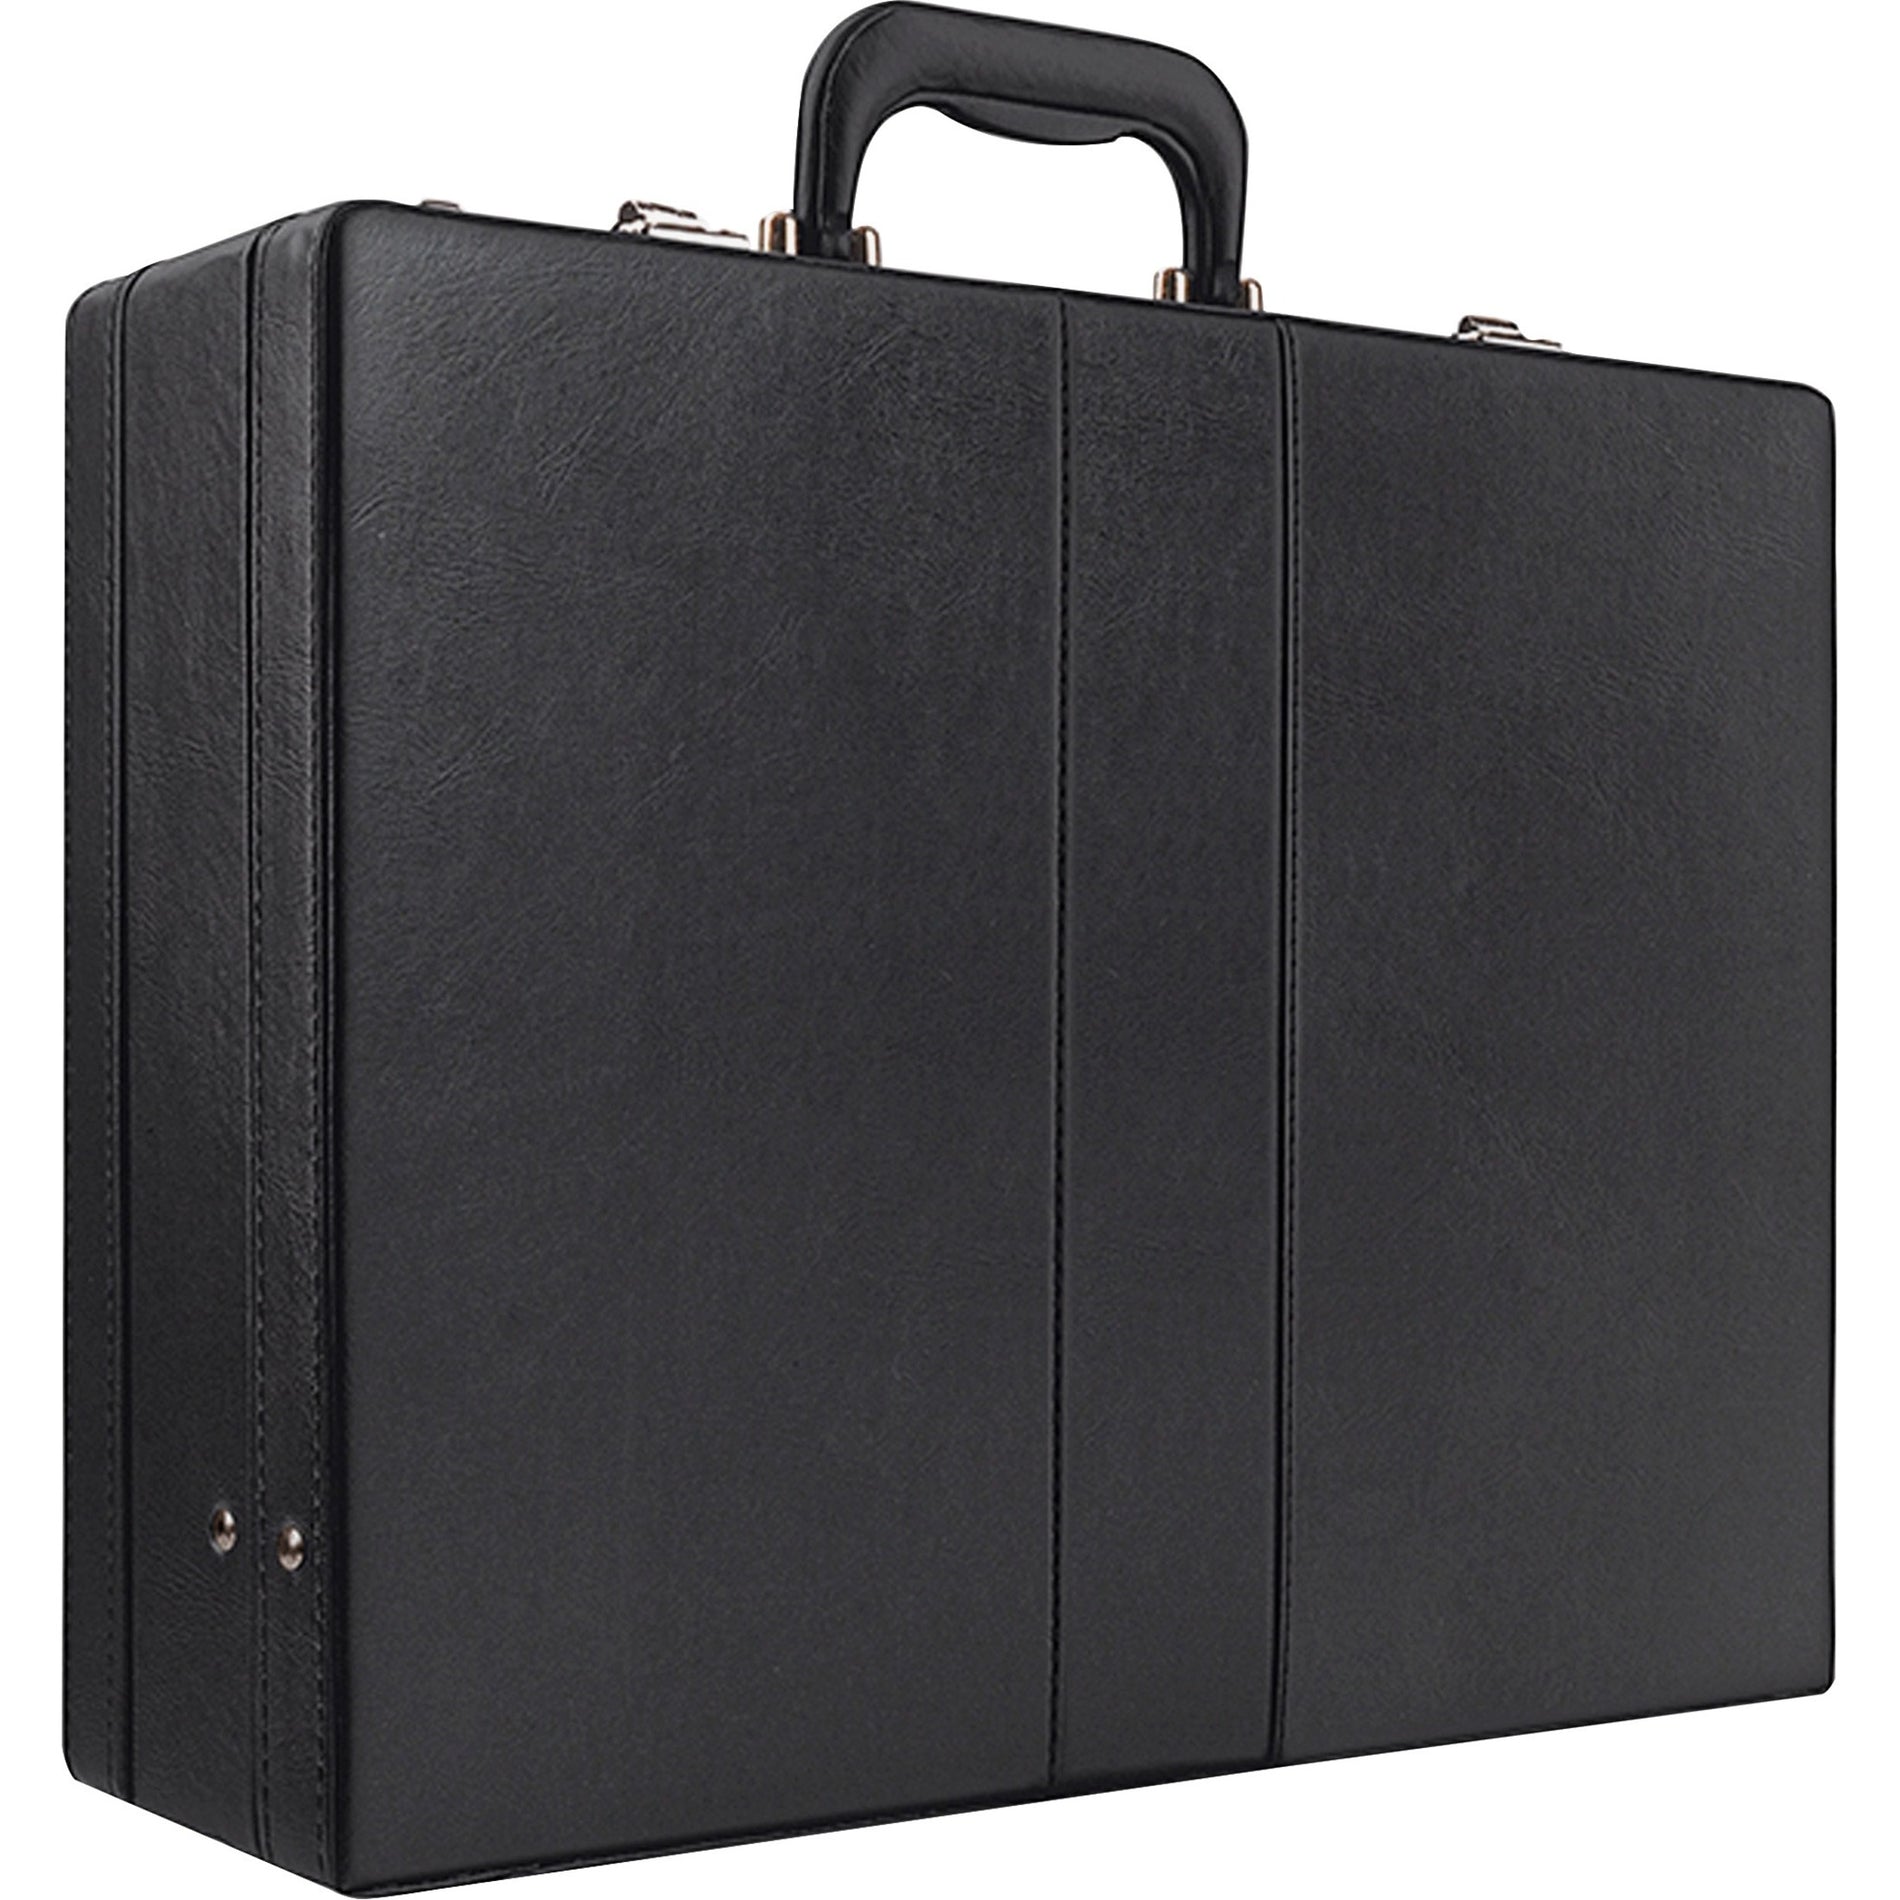 Solo K85-4 US Luggage Classic Expandable Attache Case, Black